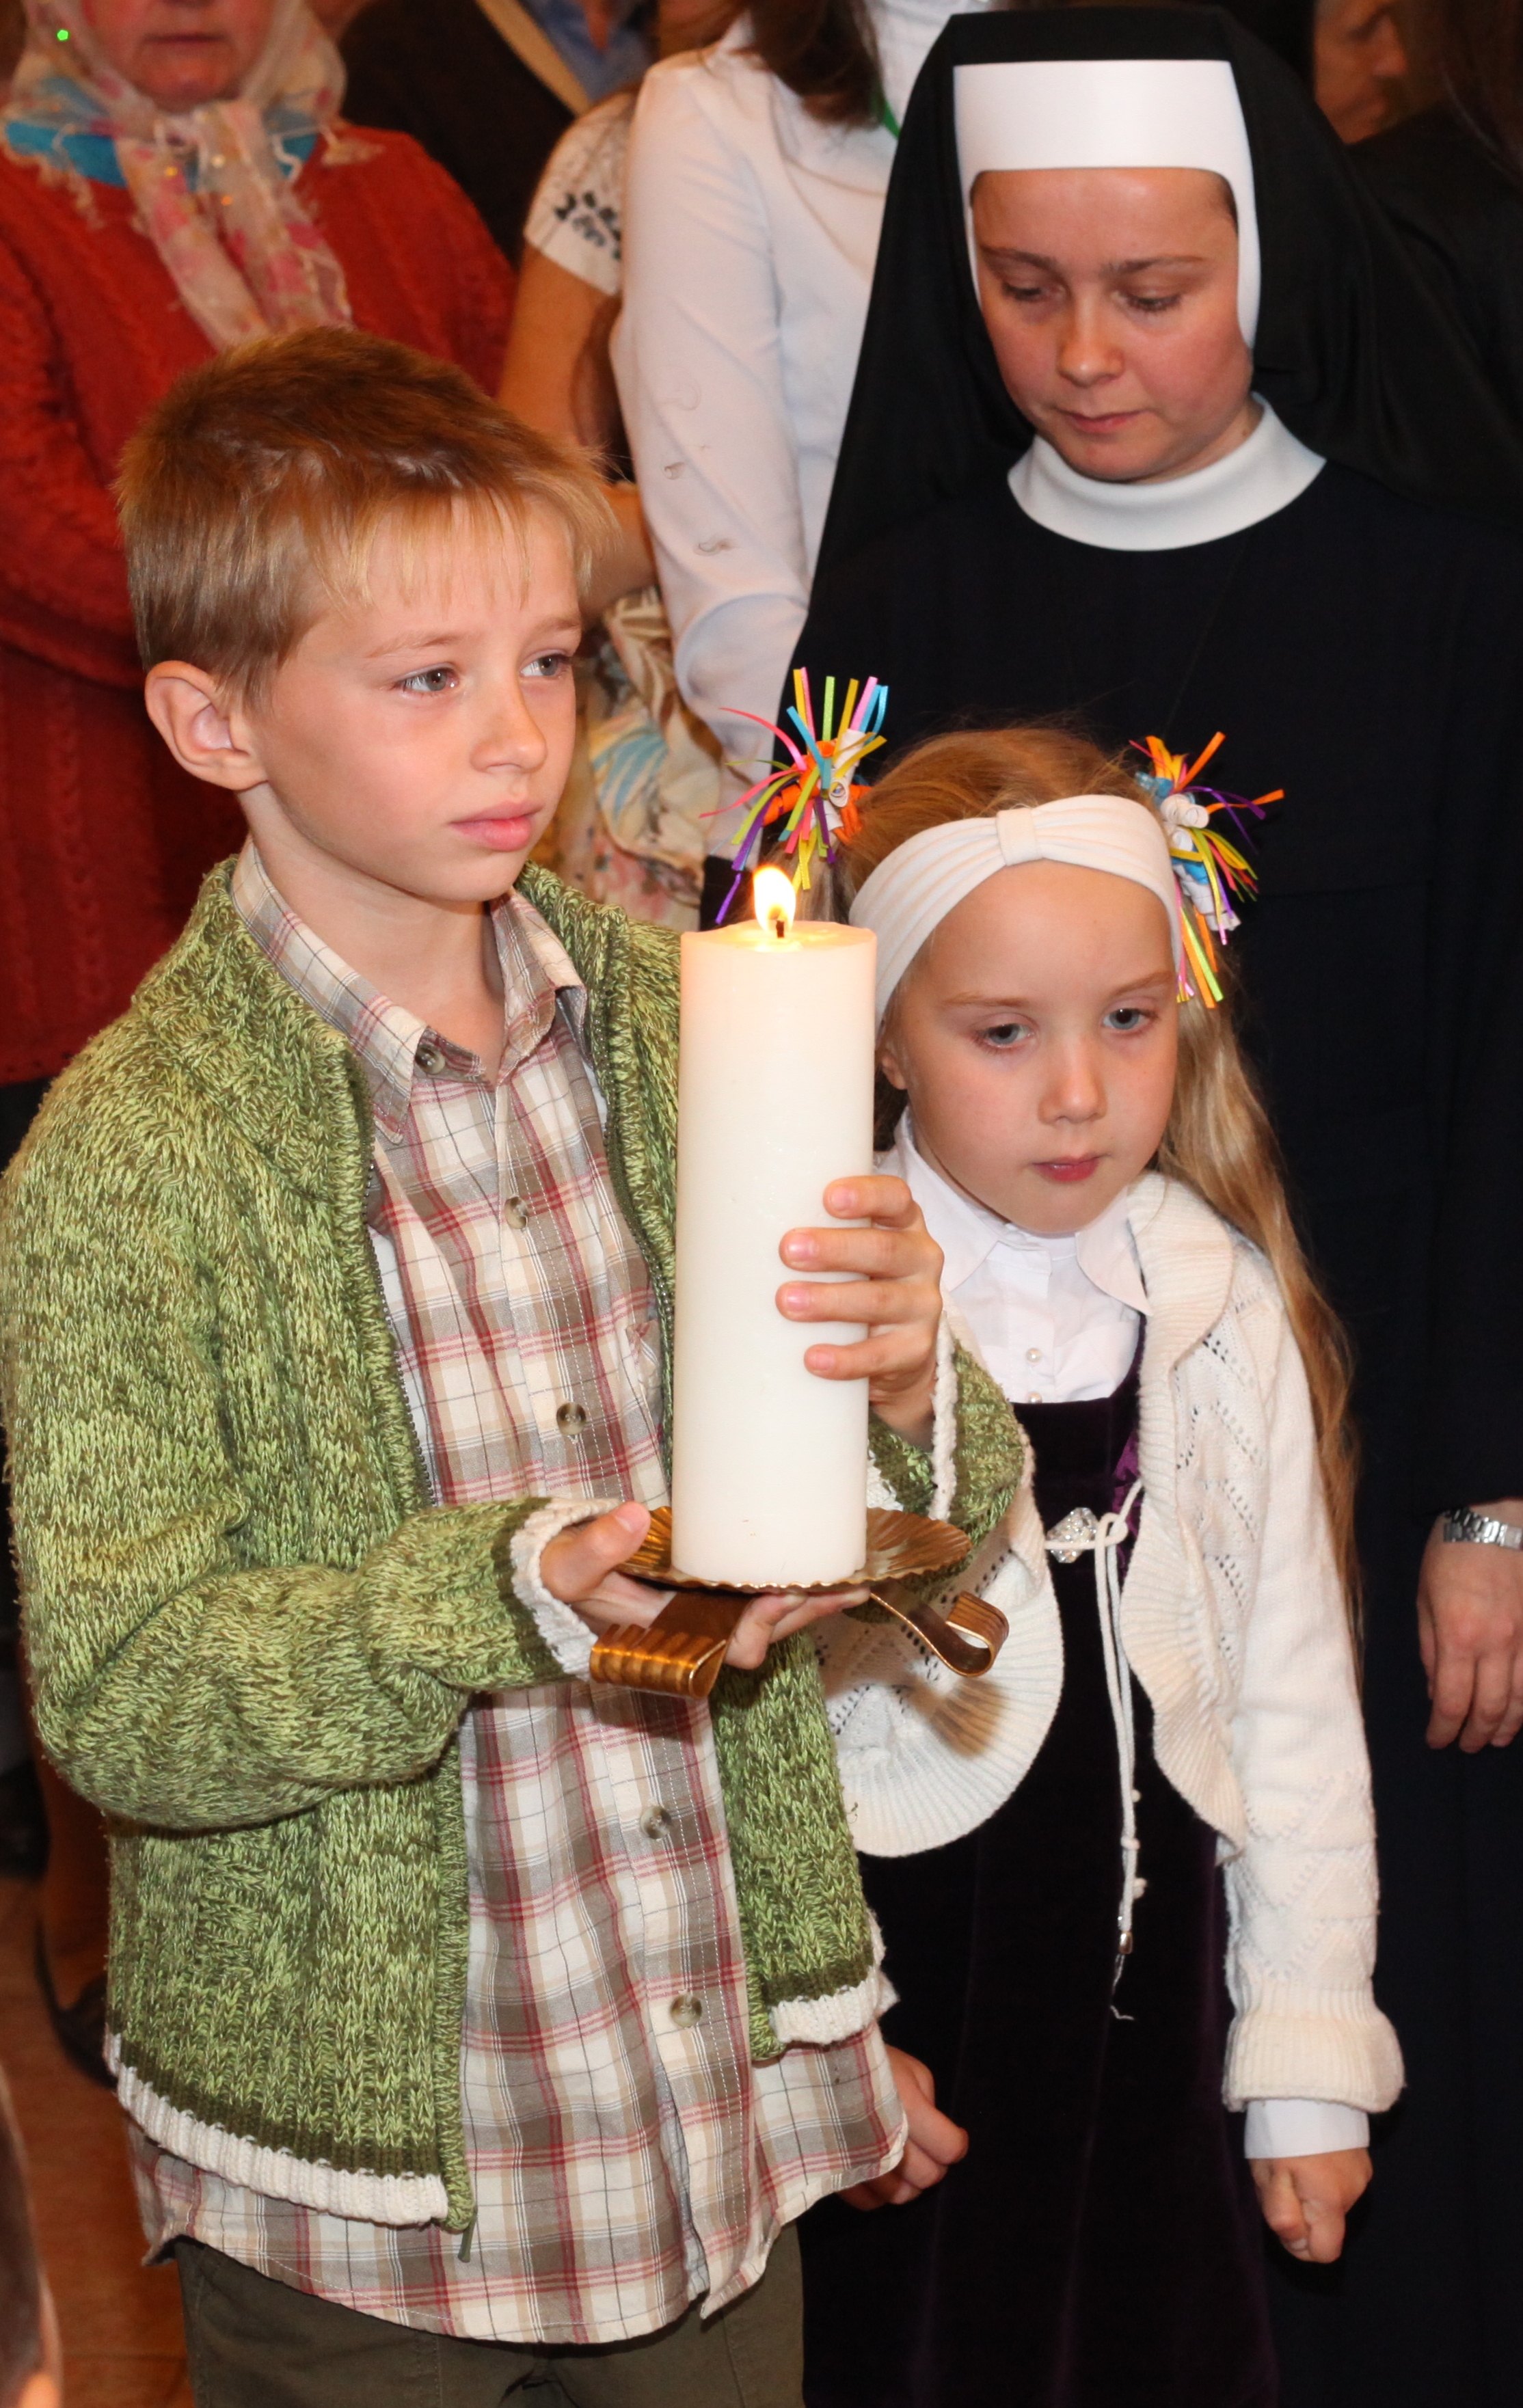 Catholic children at a Holy Mass